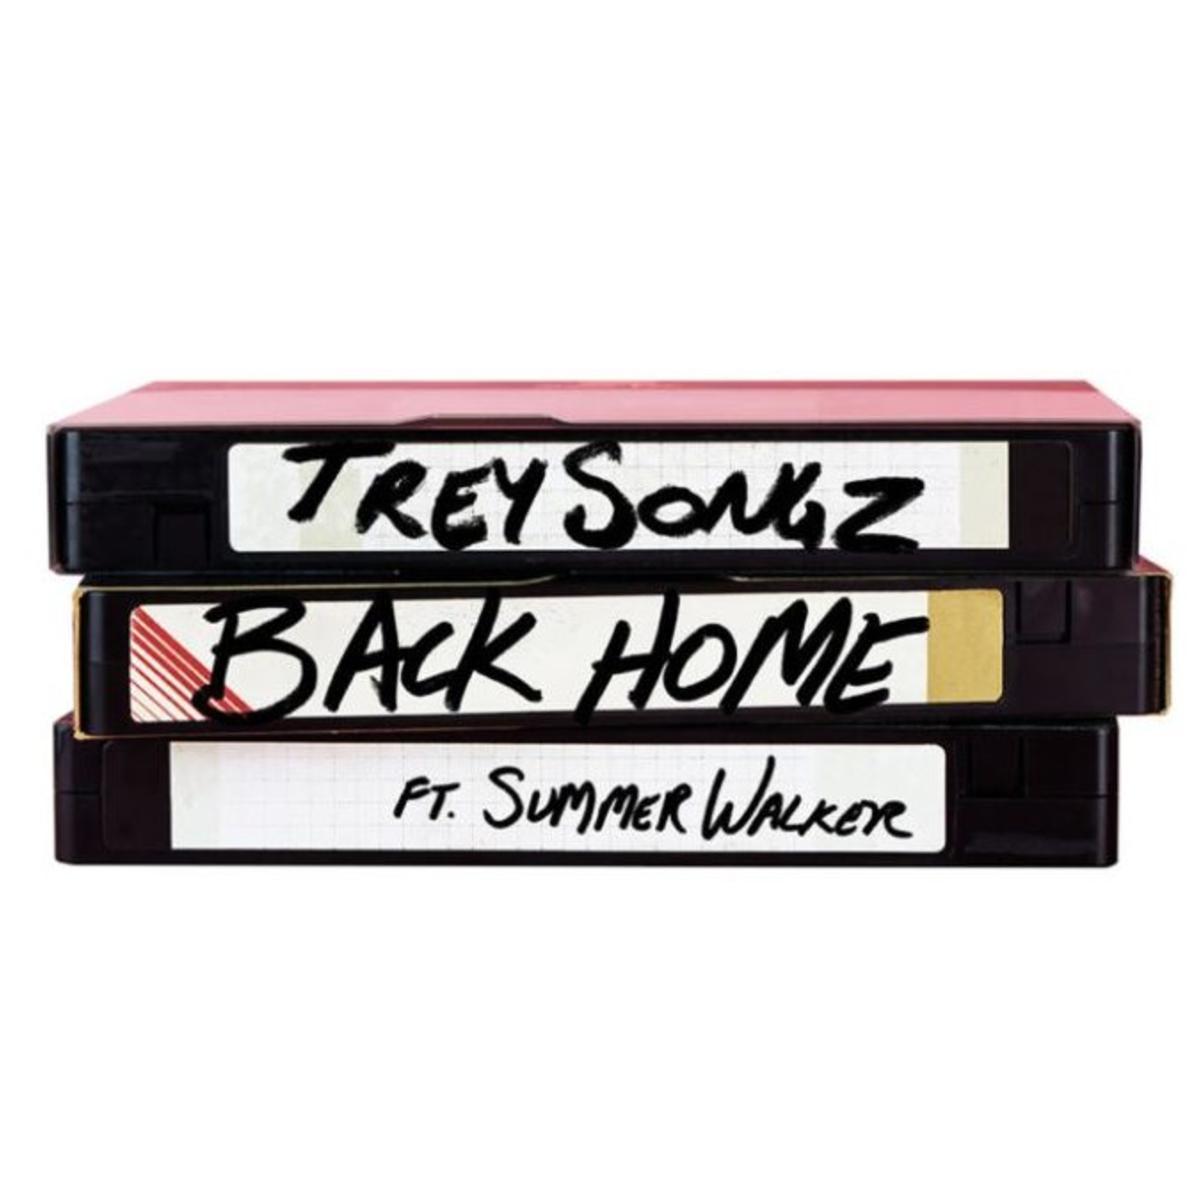 New Music: Trey Songz – Back Home (featuring Summer Walker)